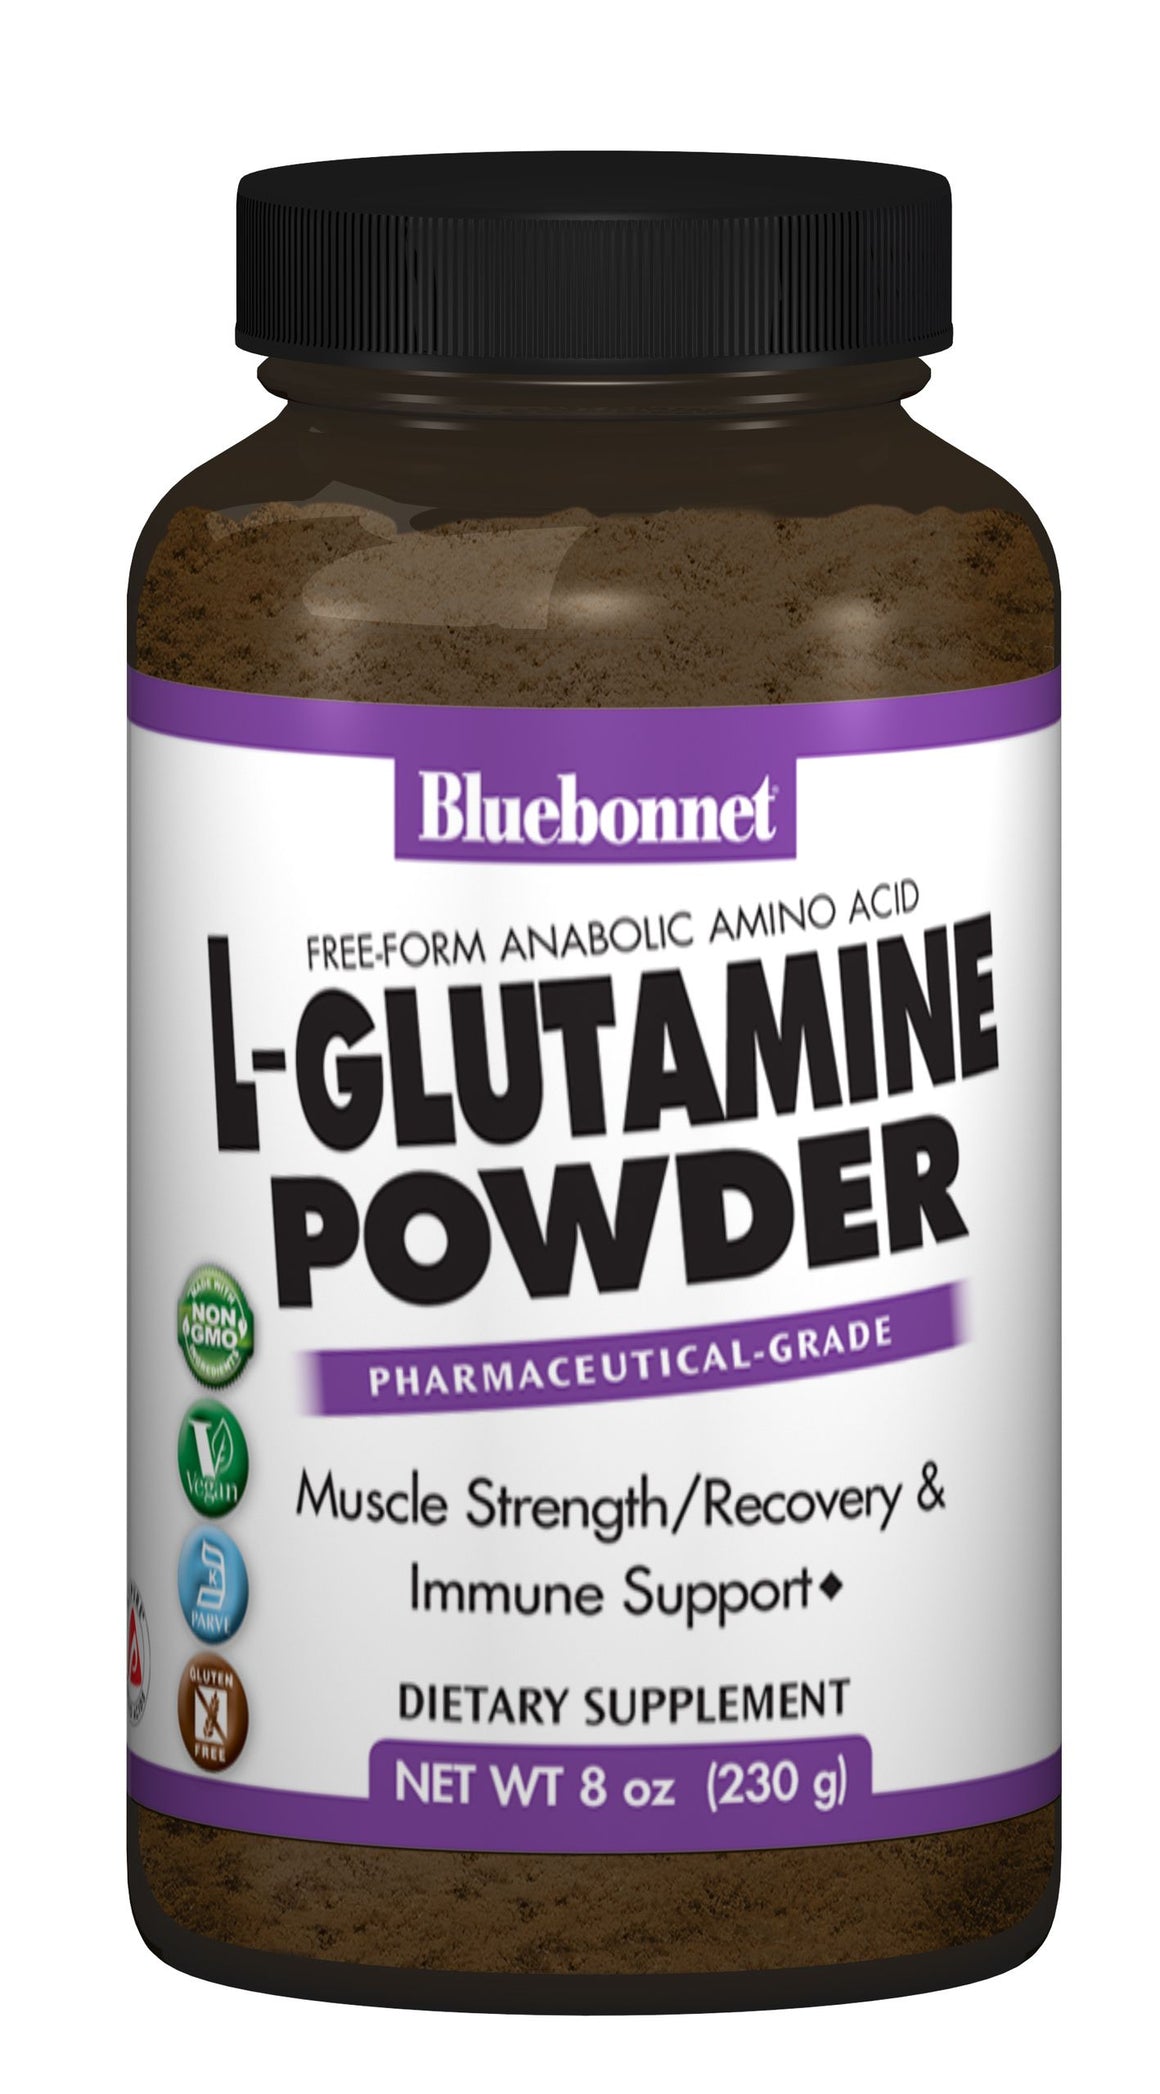 A bottle of Bluebonnet L-Glutamine Powder